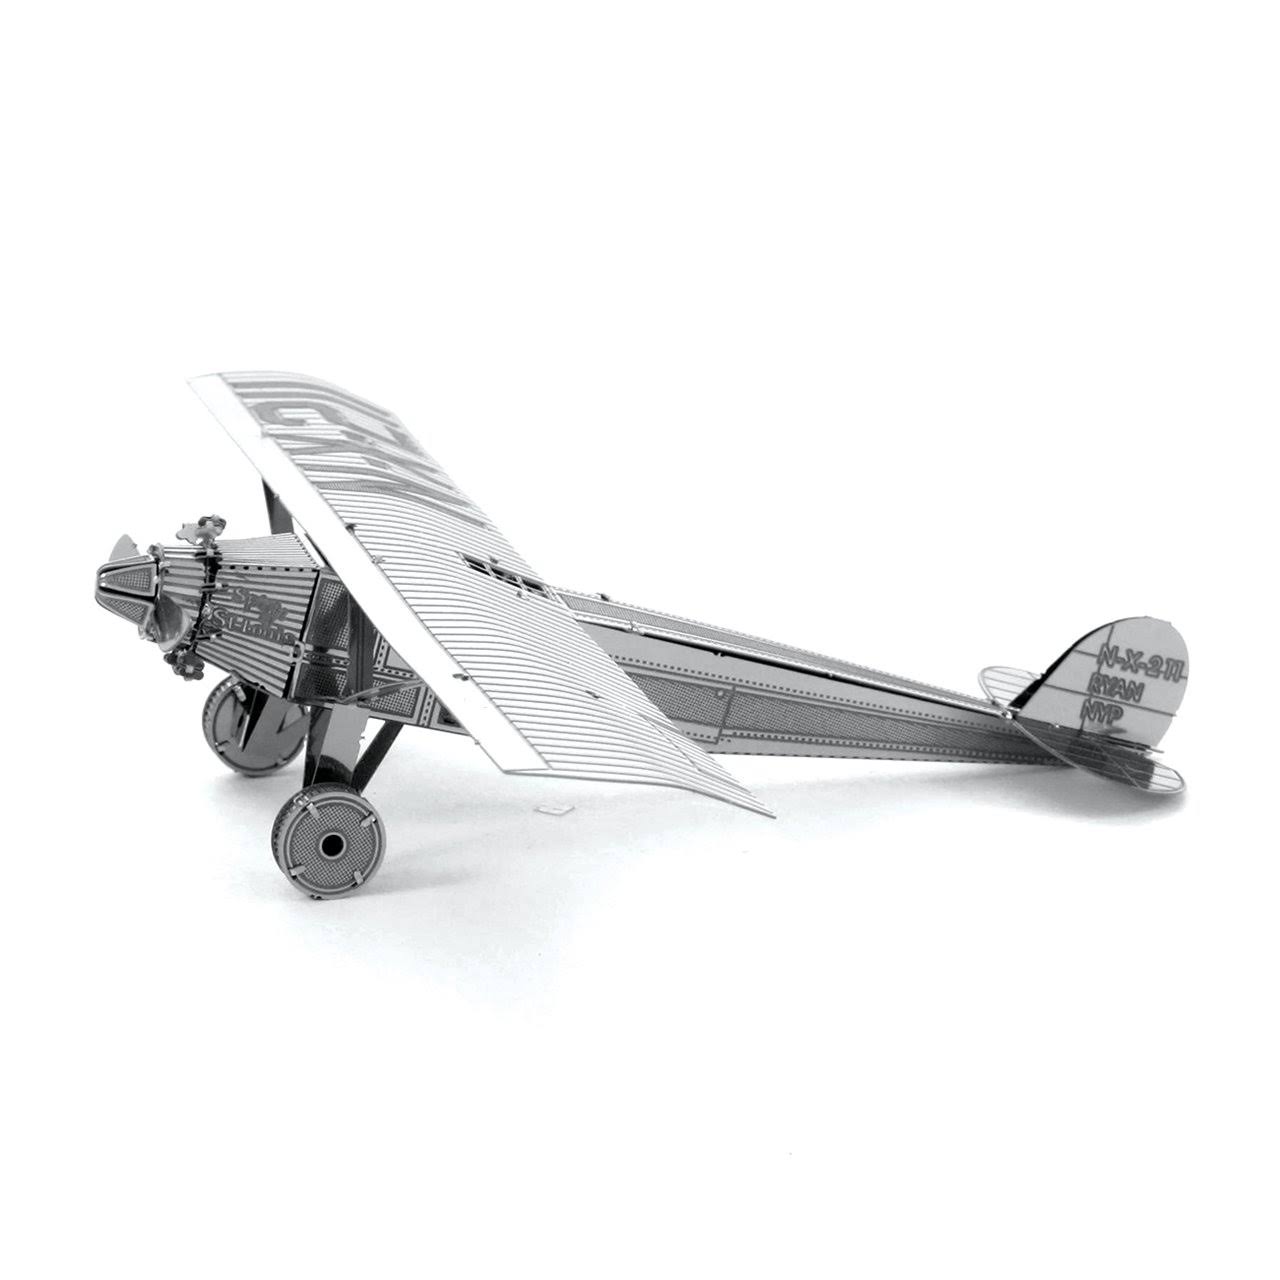 Fascinations Metal Earth 3d Laser Cut Steel Model - Spirit of St. Louis Plane